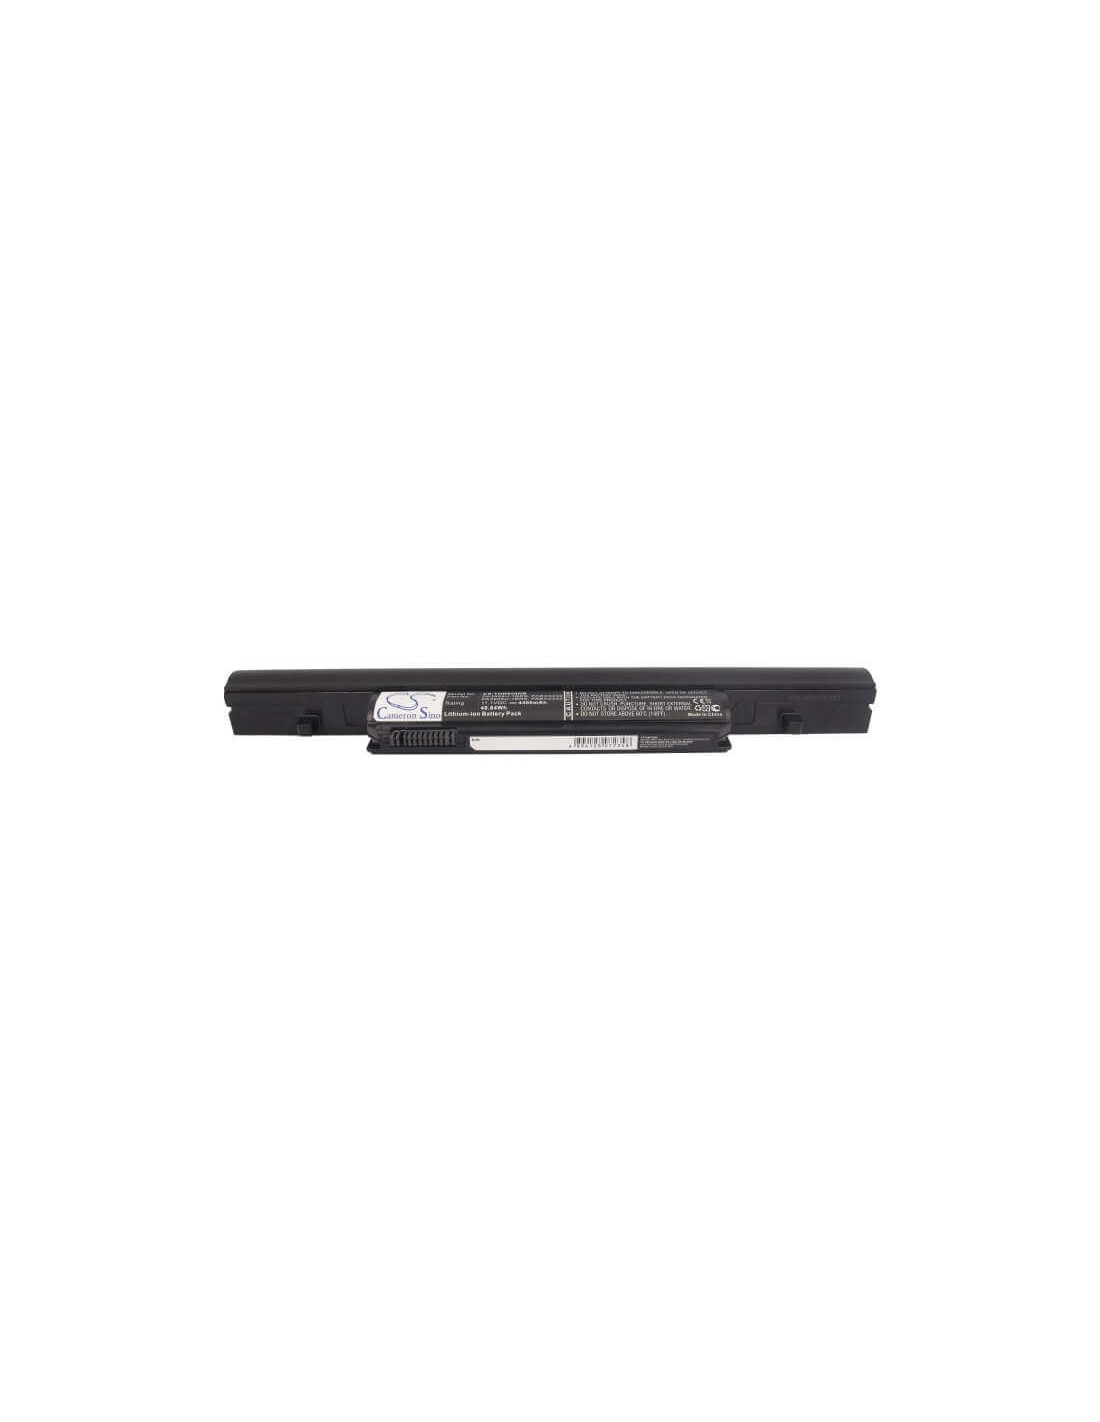 Black Battery for Toshiba Dynabook R751, Dynabook R752, Dynabook R752/f 11.1V, 4400mAh - 48.84Wh